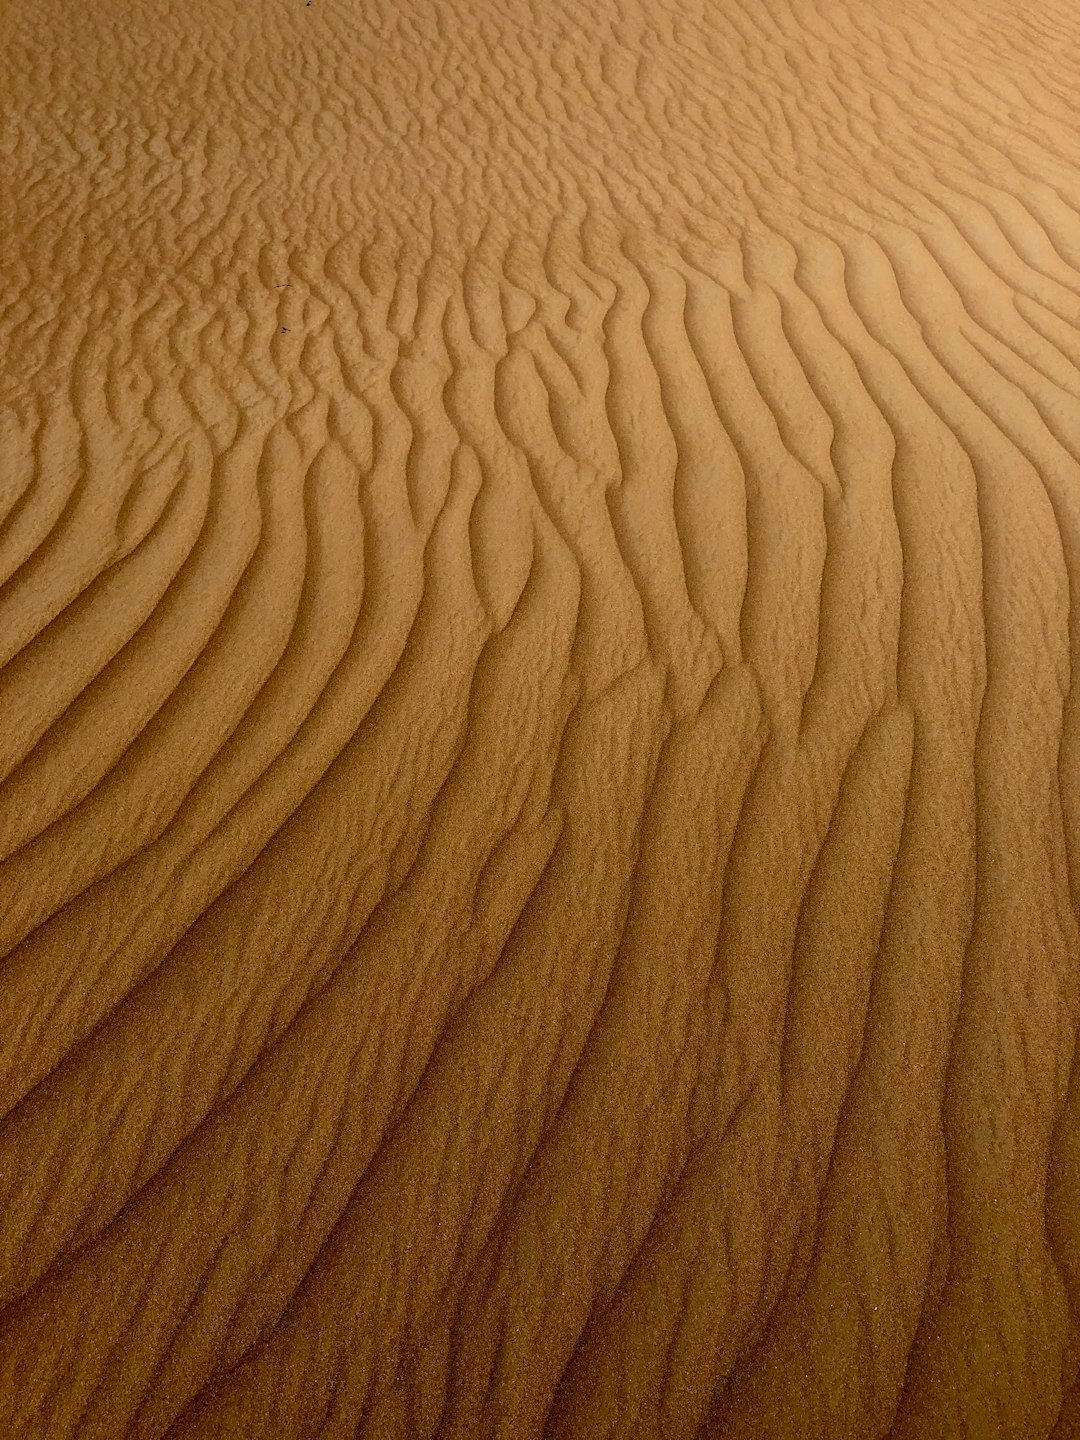 Desert photo spot Margham Dubai - United Arab Emirates